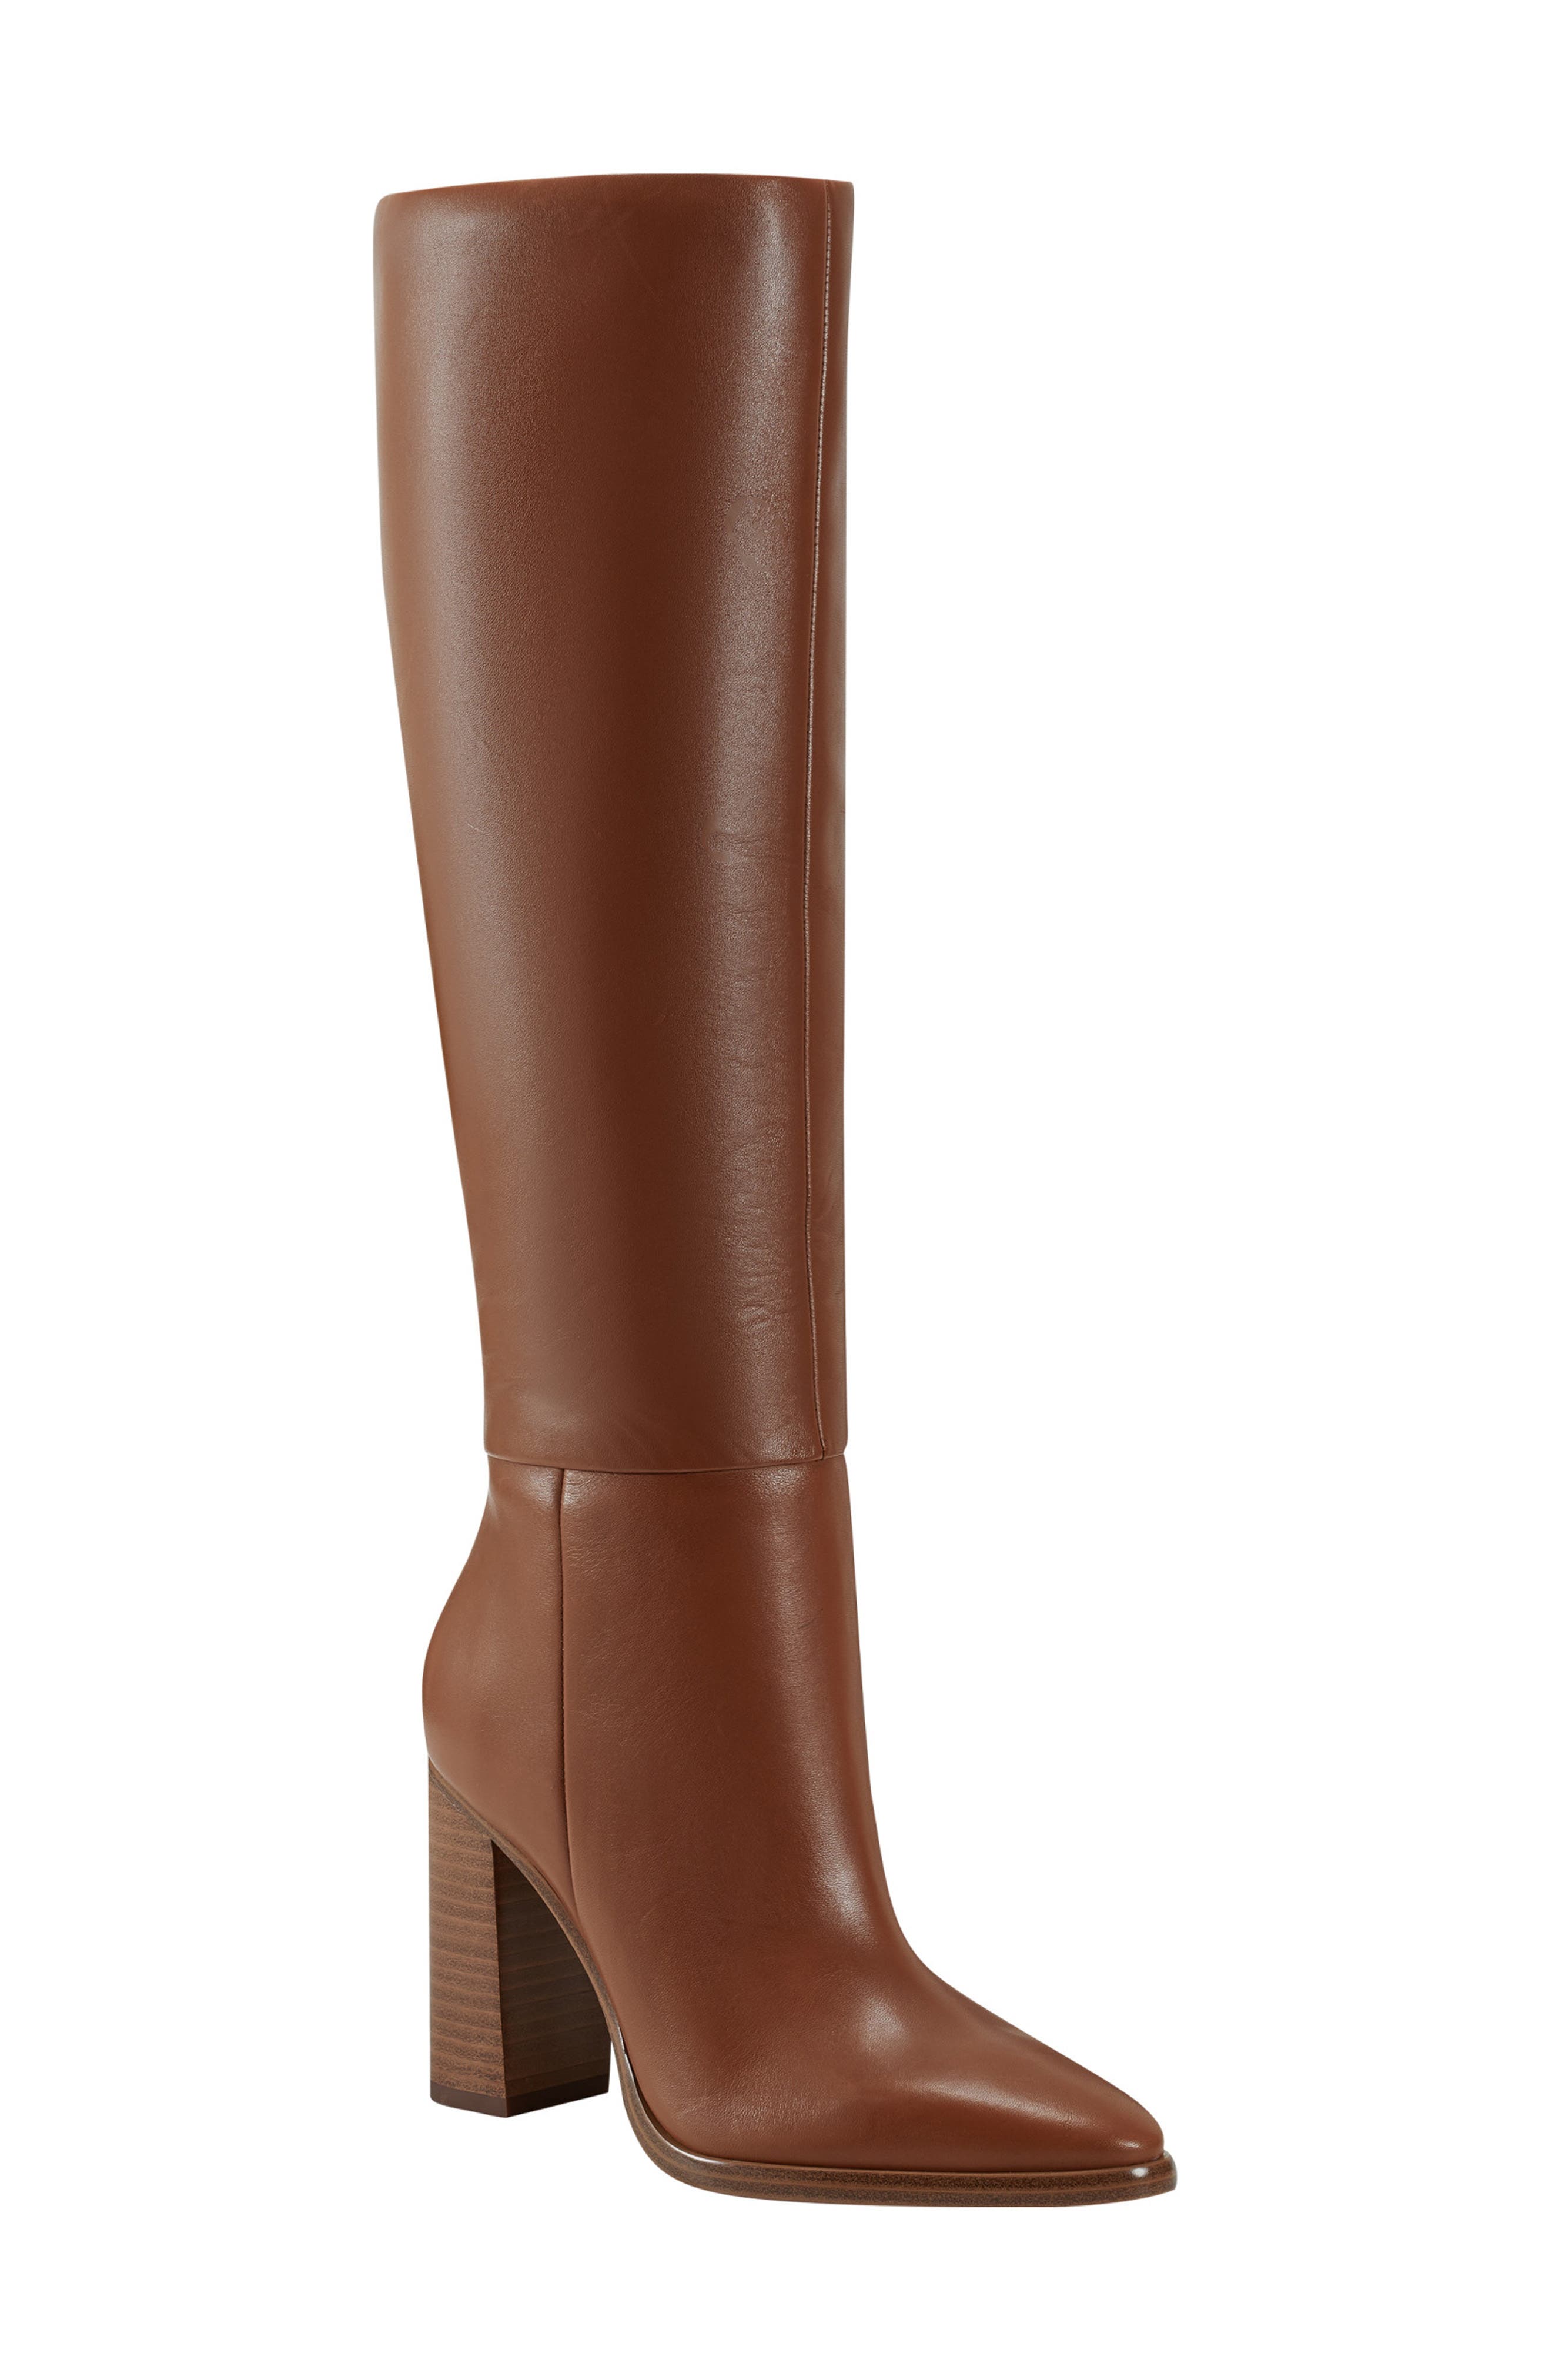 womens tall brown dress boots